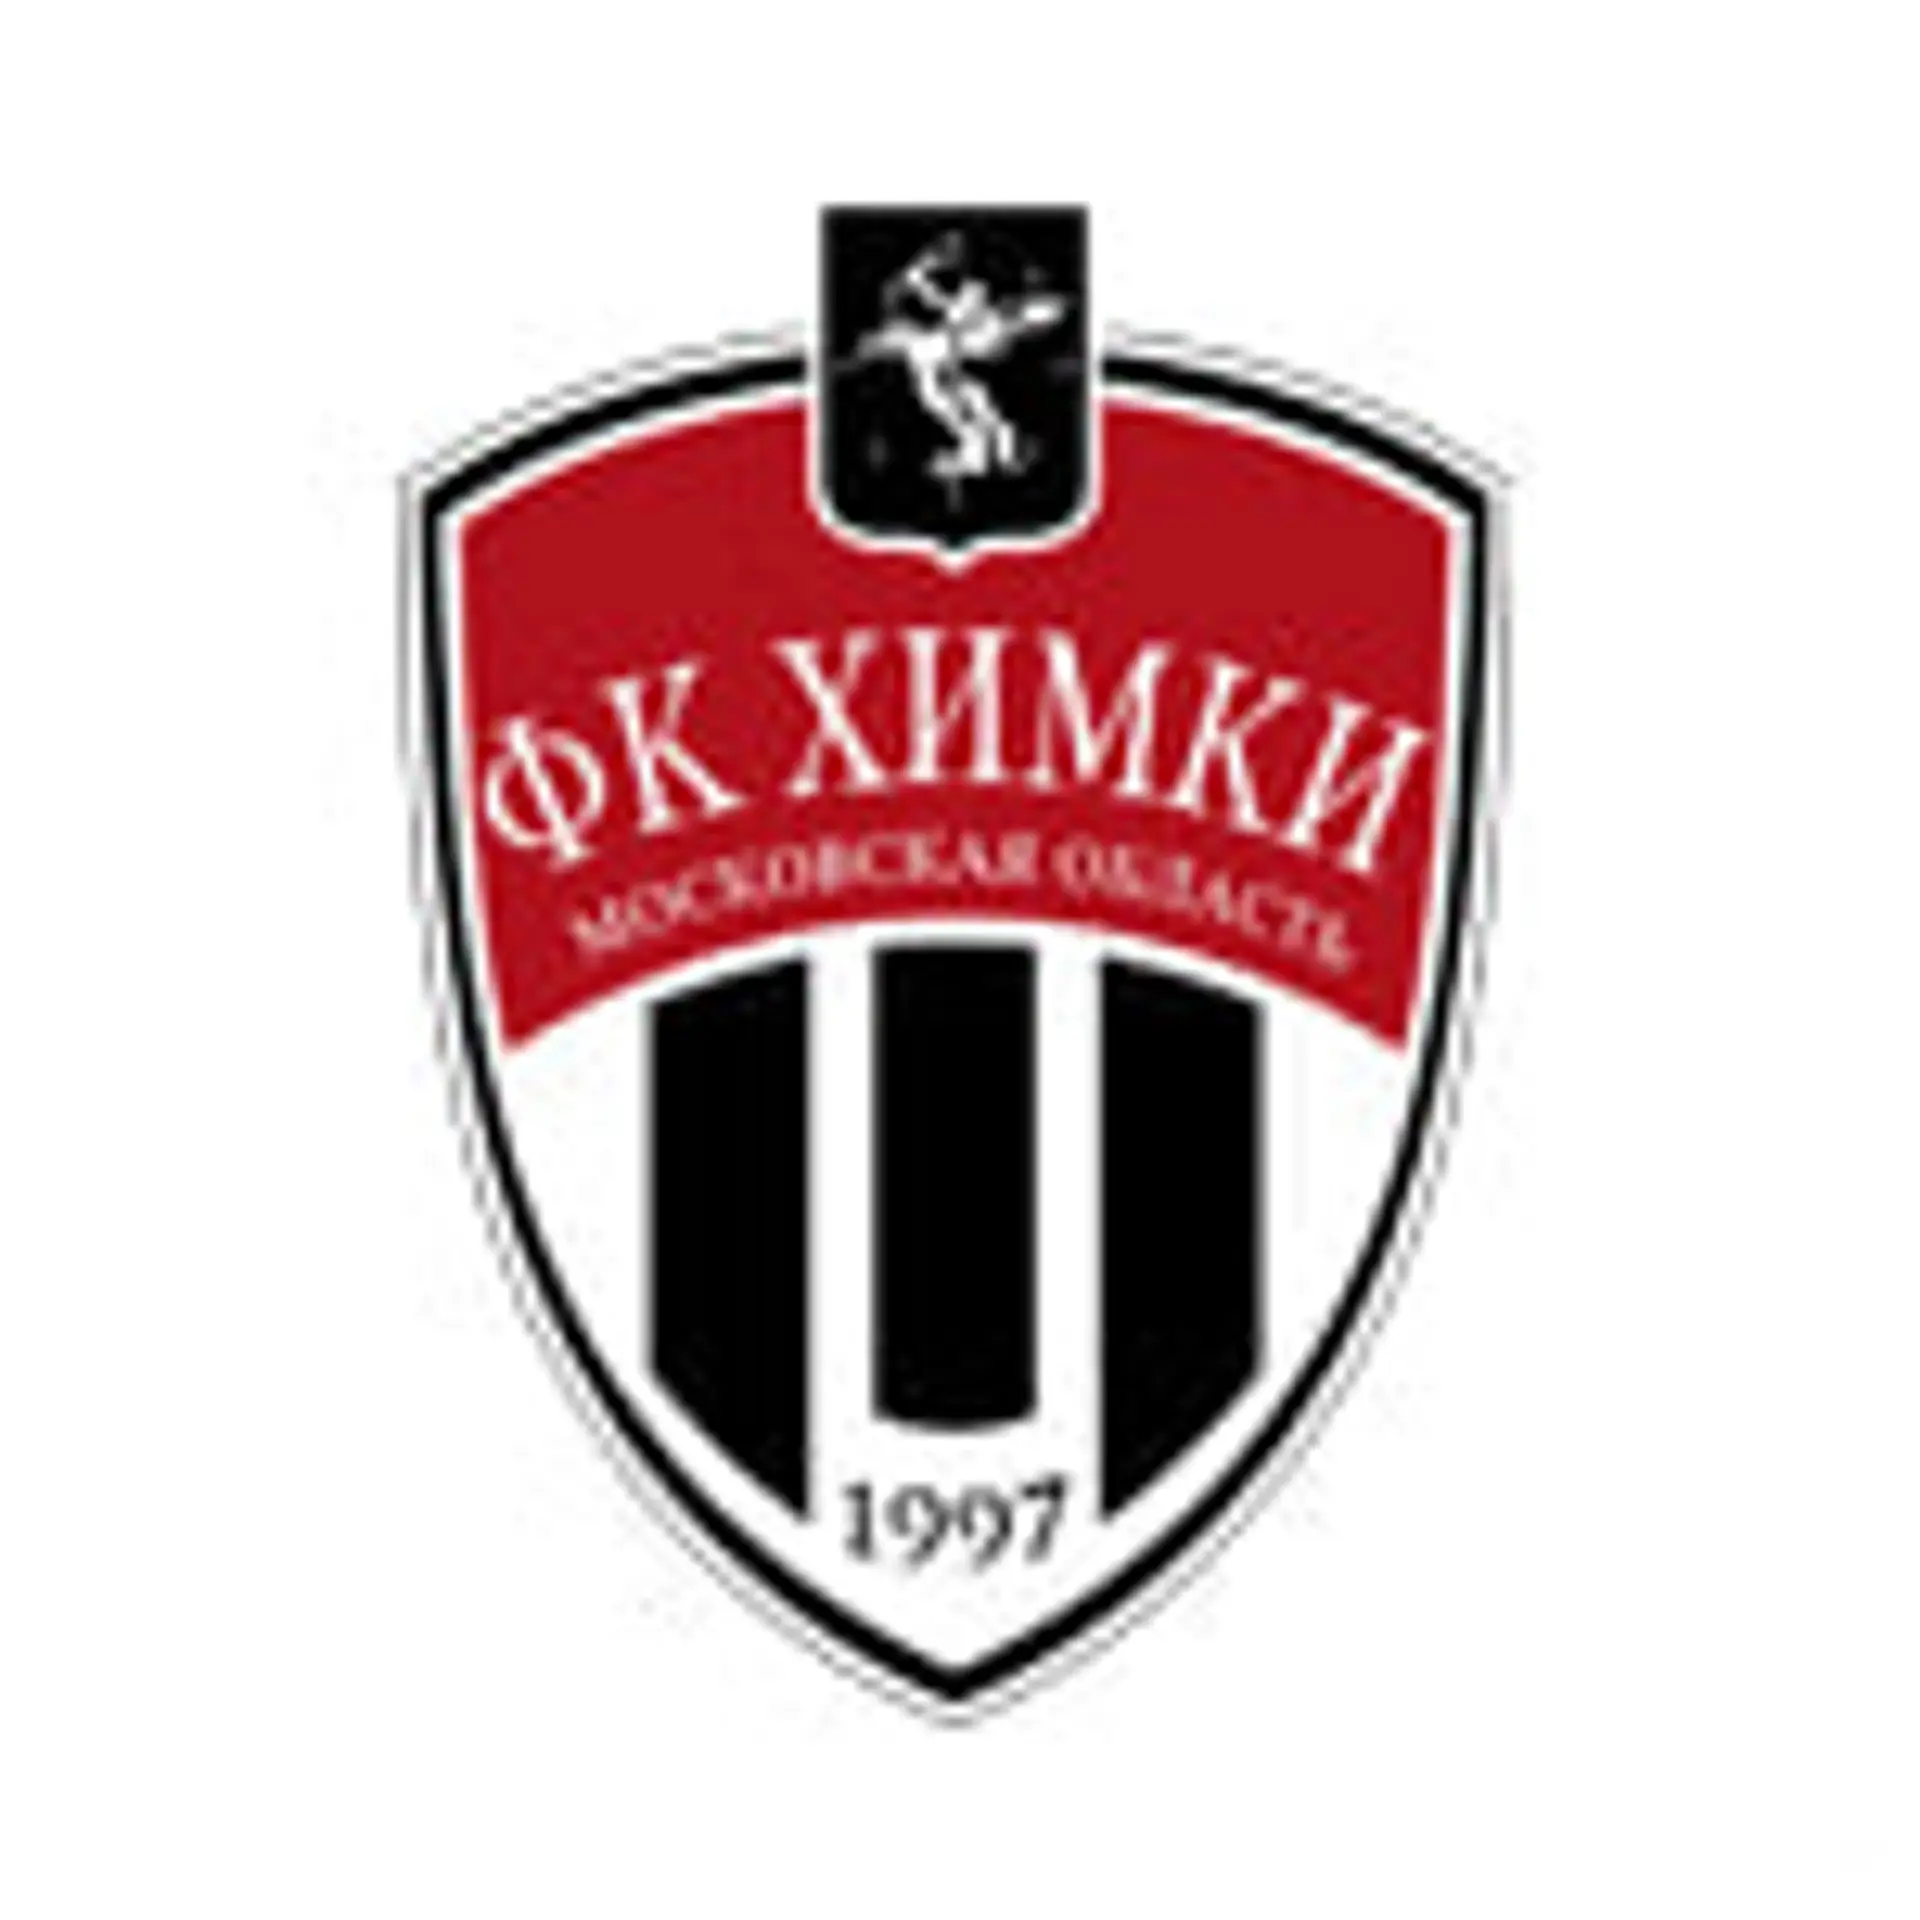 Khimki Equipe